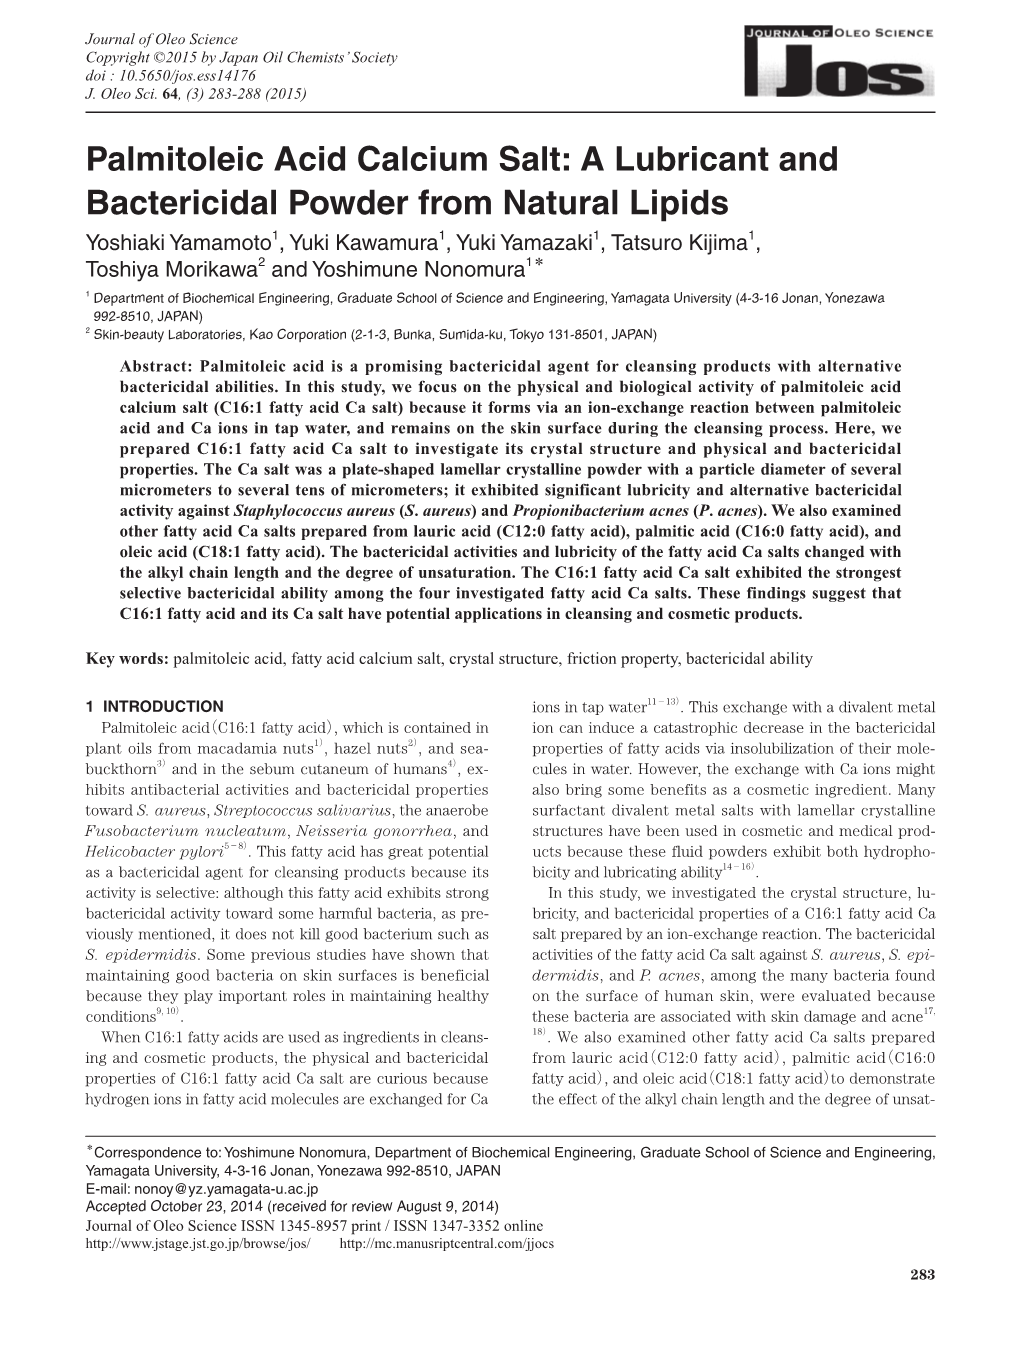 Palmitoleic Acid Calcium Salt: a Lubricant and Bactericidal Powder